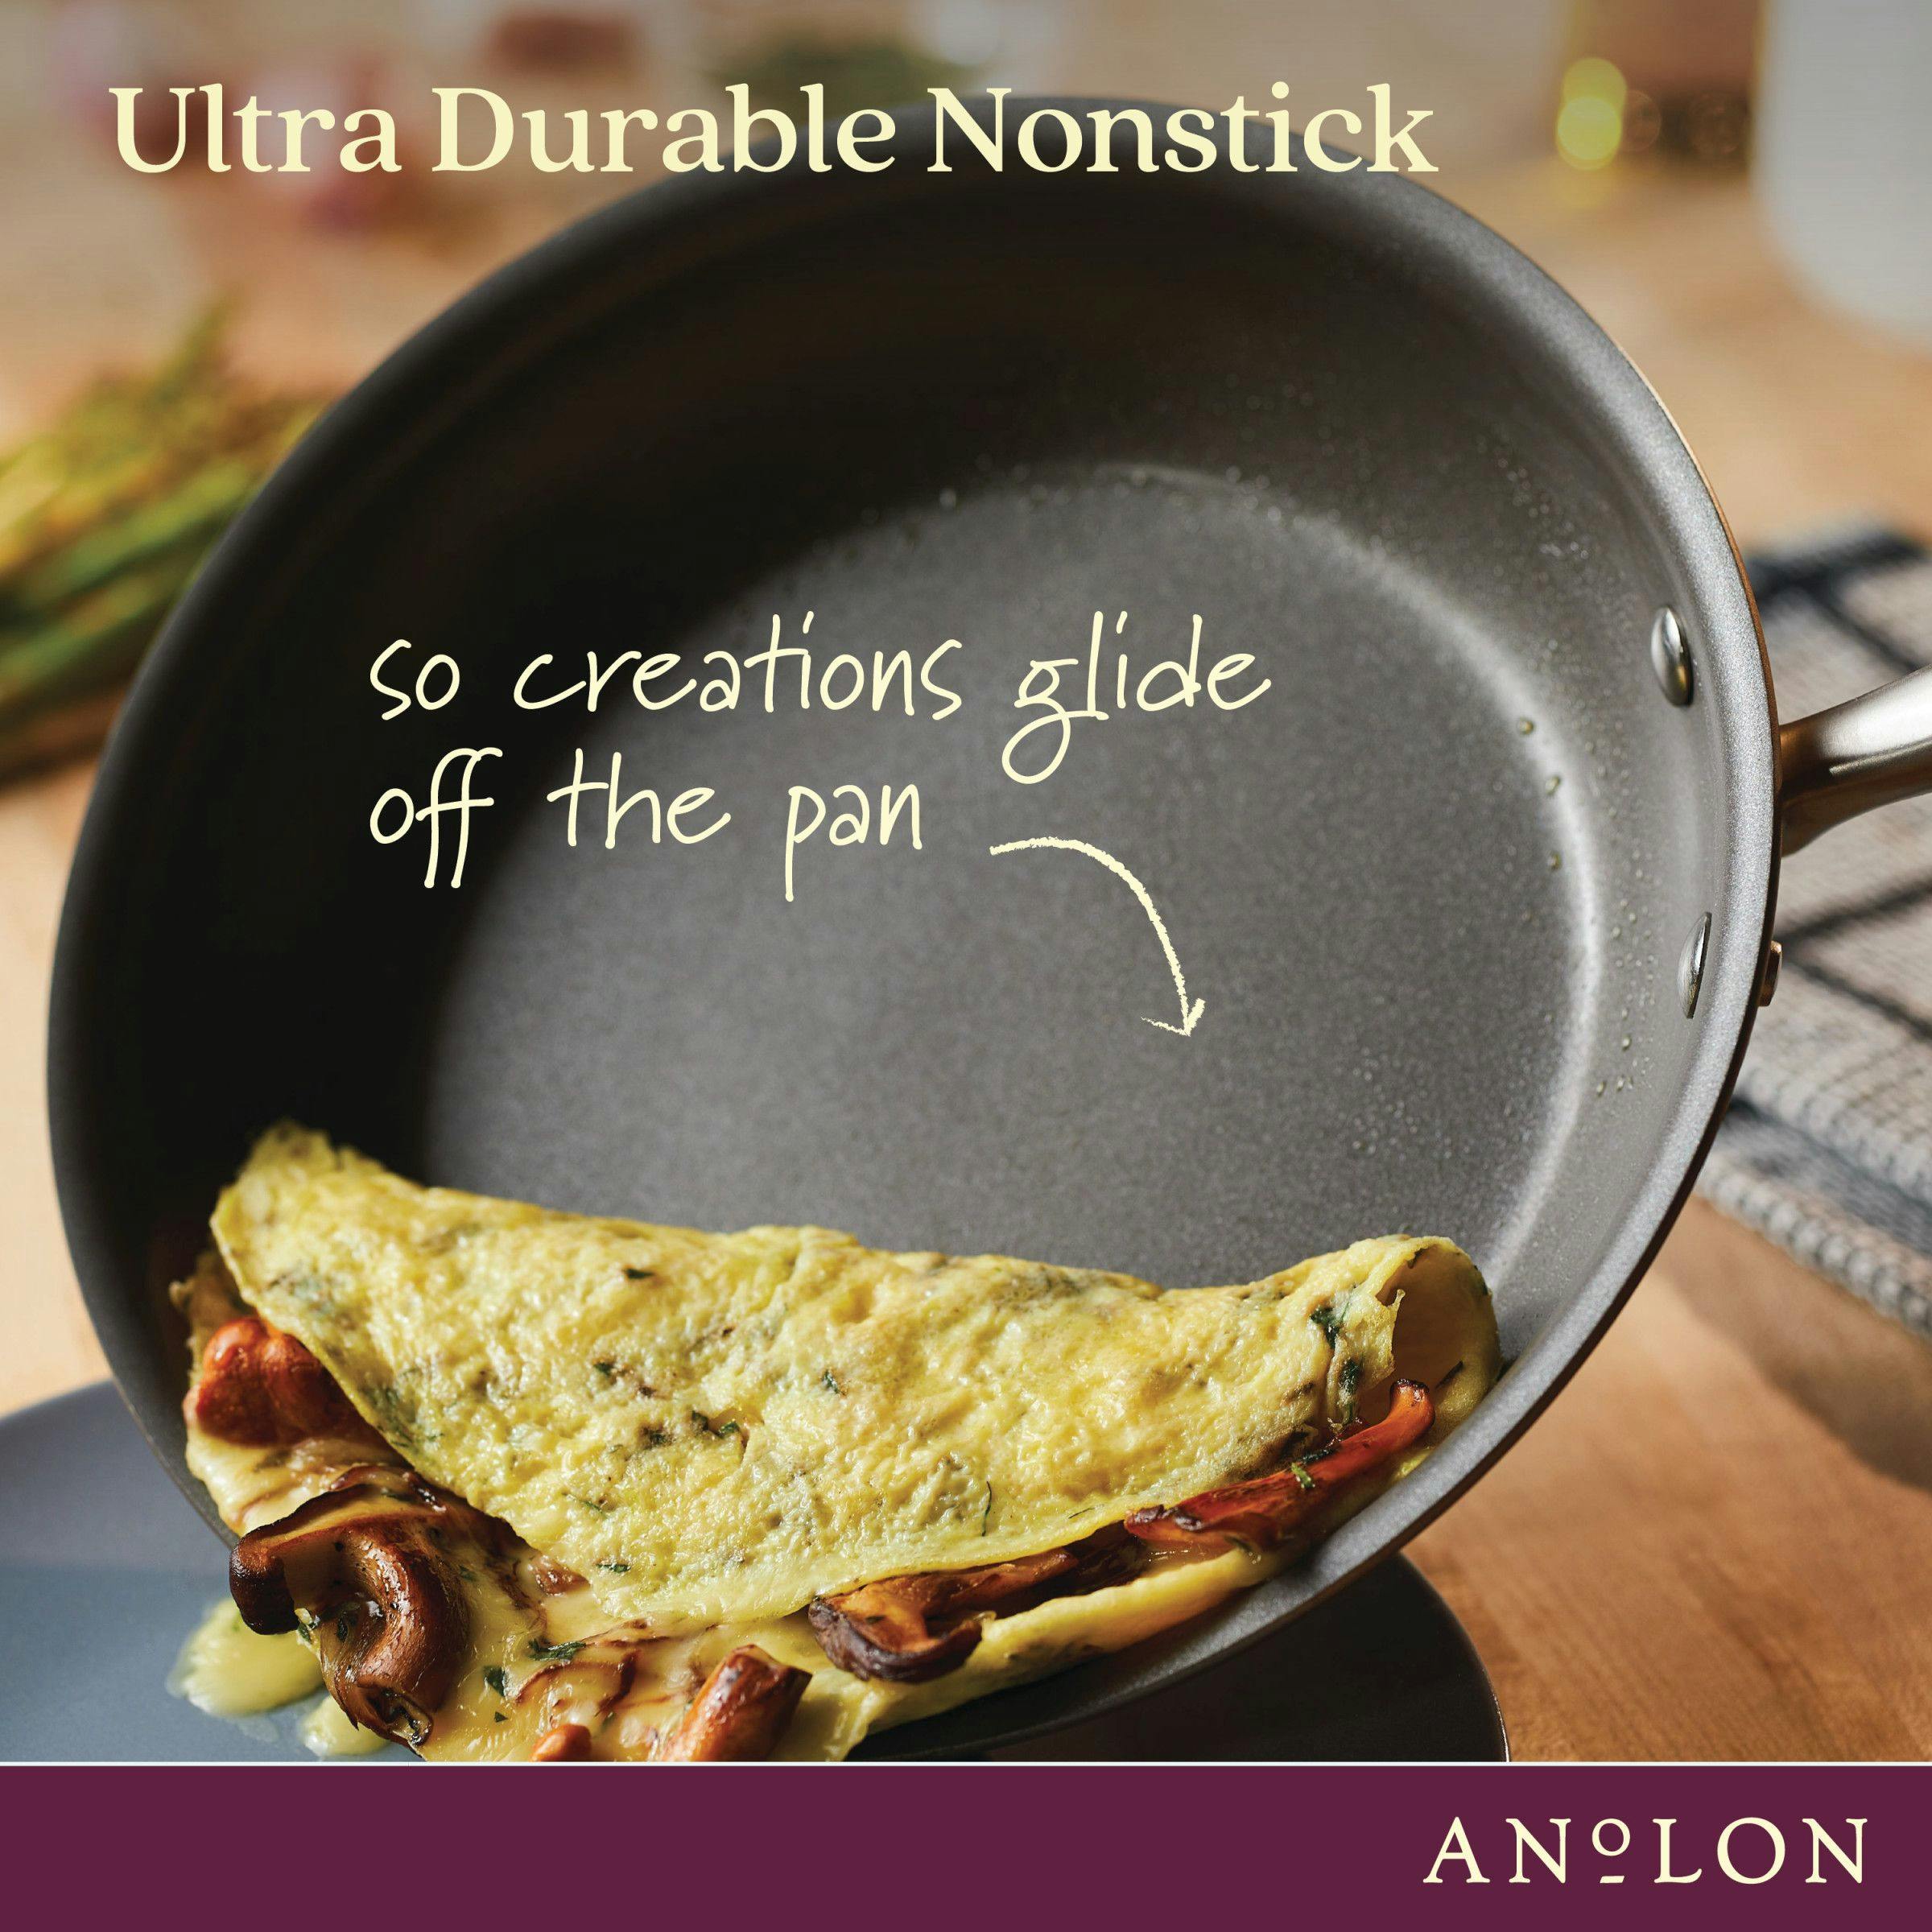 Anolon Advanced Home Hard-Anodized Nonstick Saucepot with Lid, 4.5-Quart, Bronze